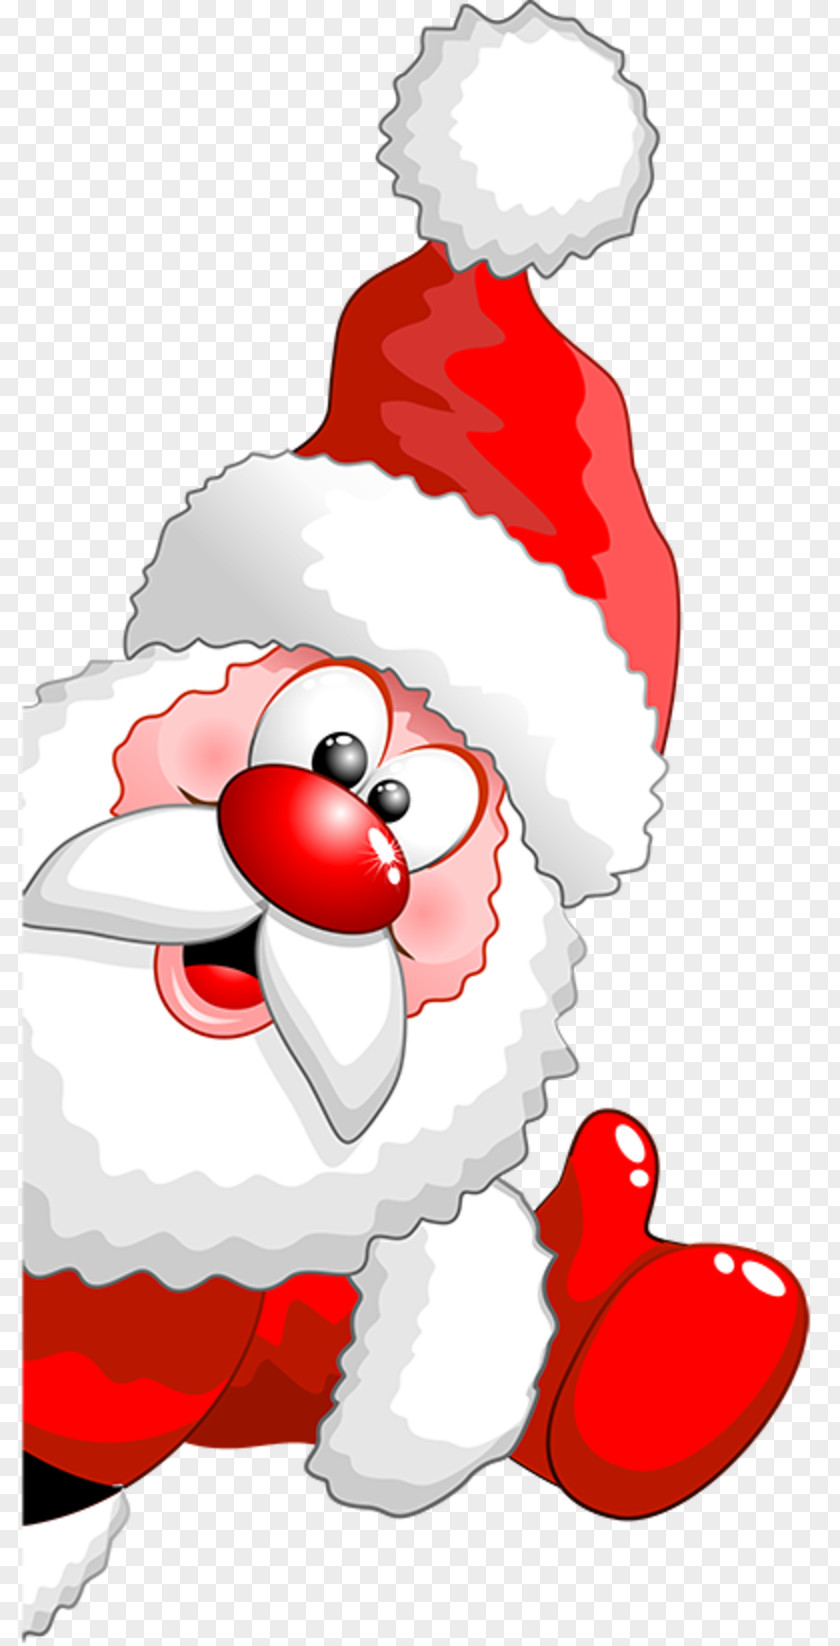 Santa Claus Reindeer Cartoon Christmas Clip Art PNG